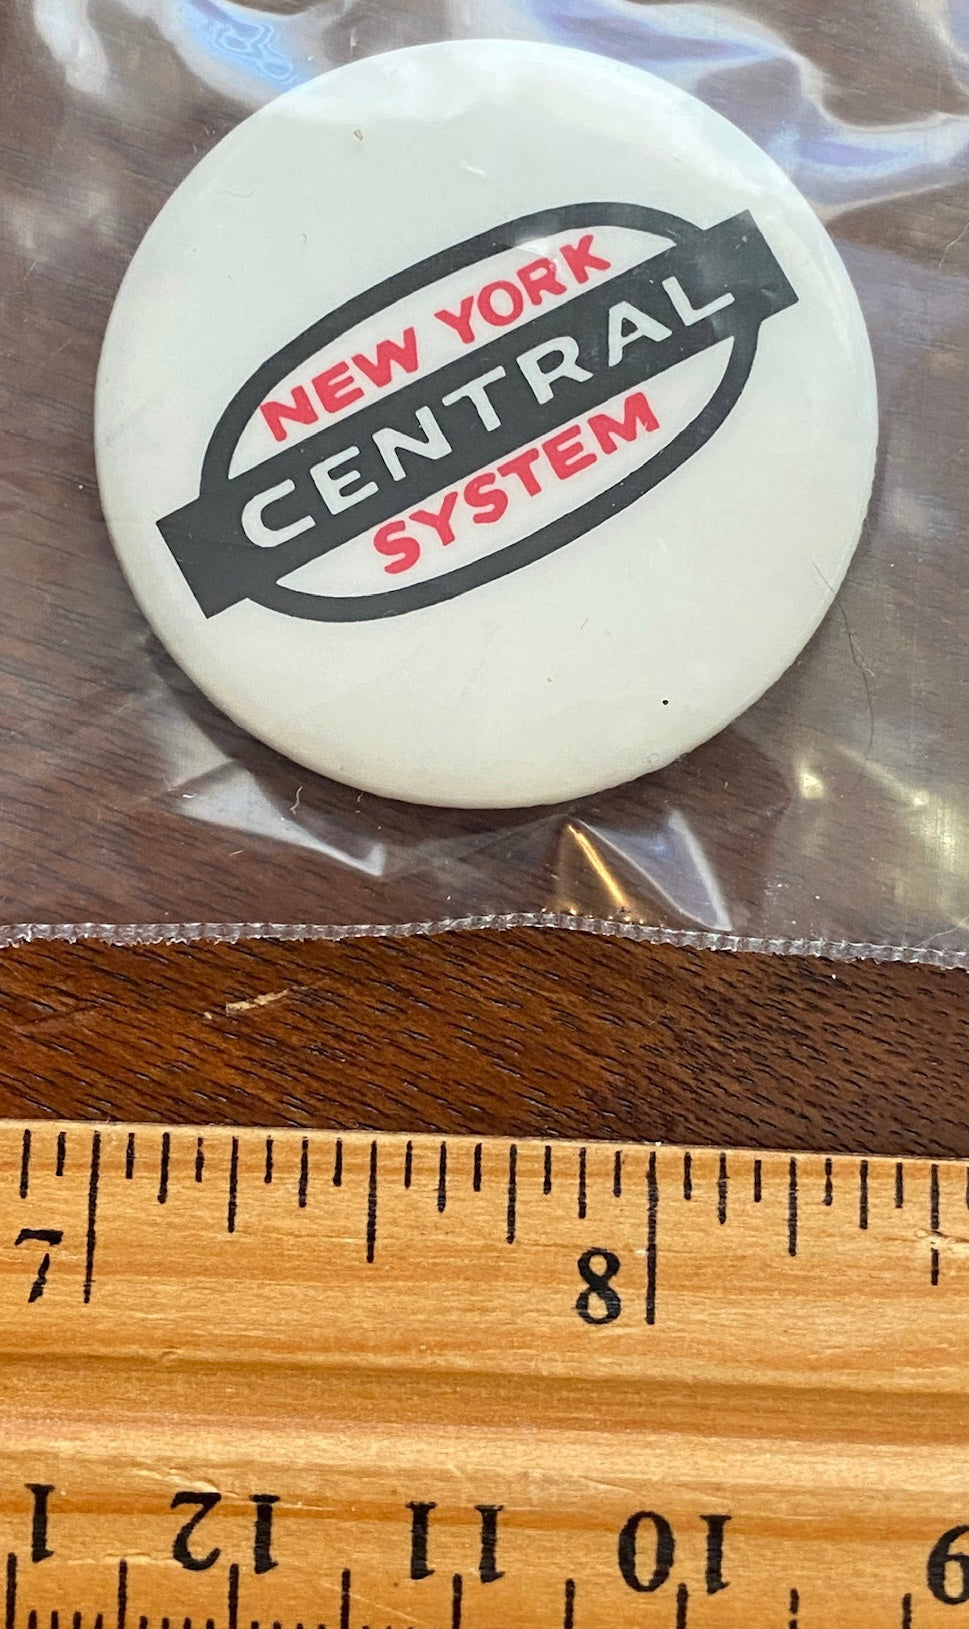 Vintage New York Central System Railroad Button Pin Souvenir